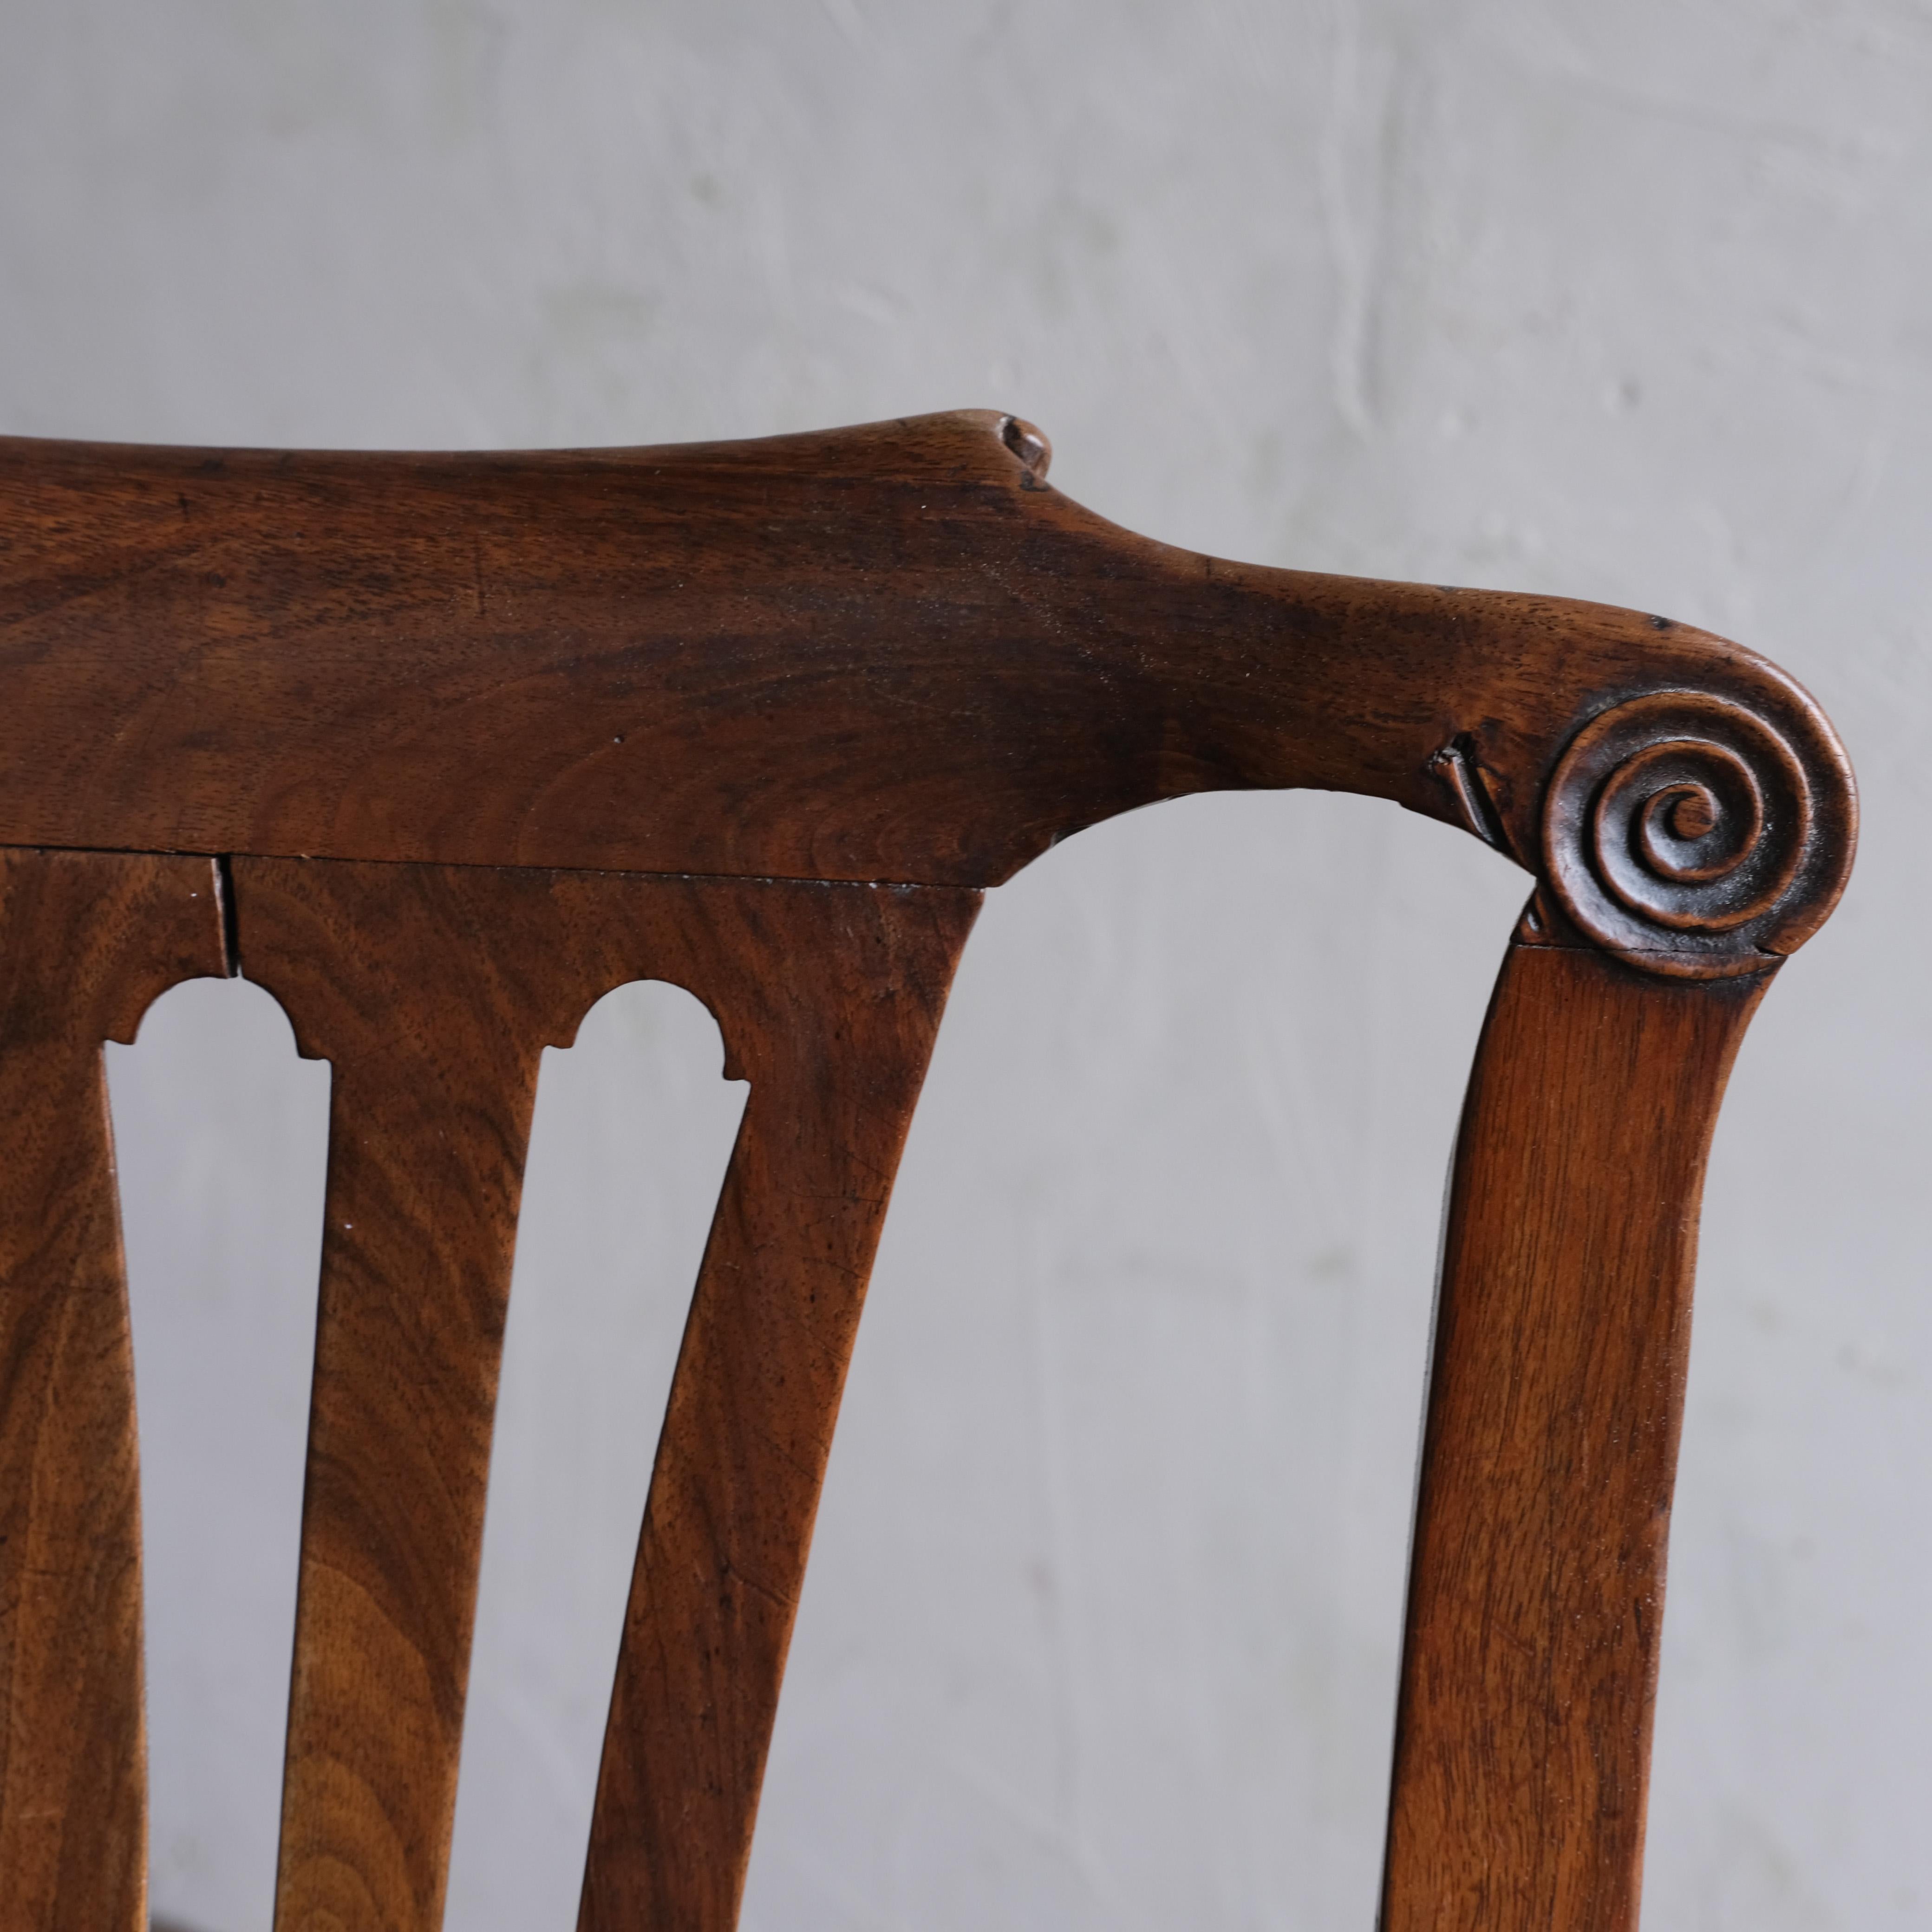 George II Walnut Chair with Needlework Seat Pad 1